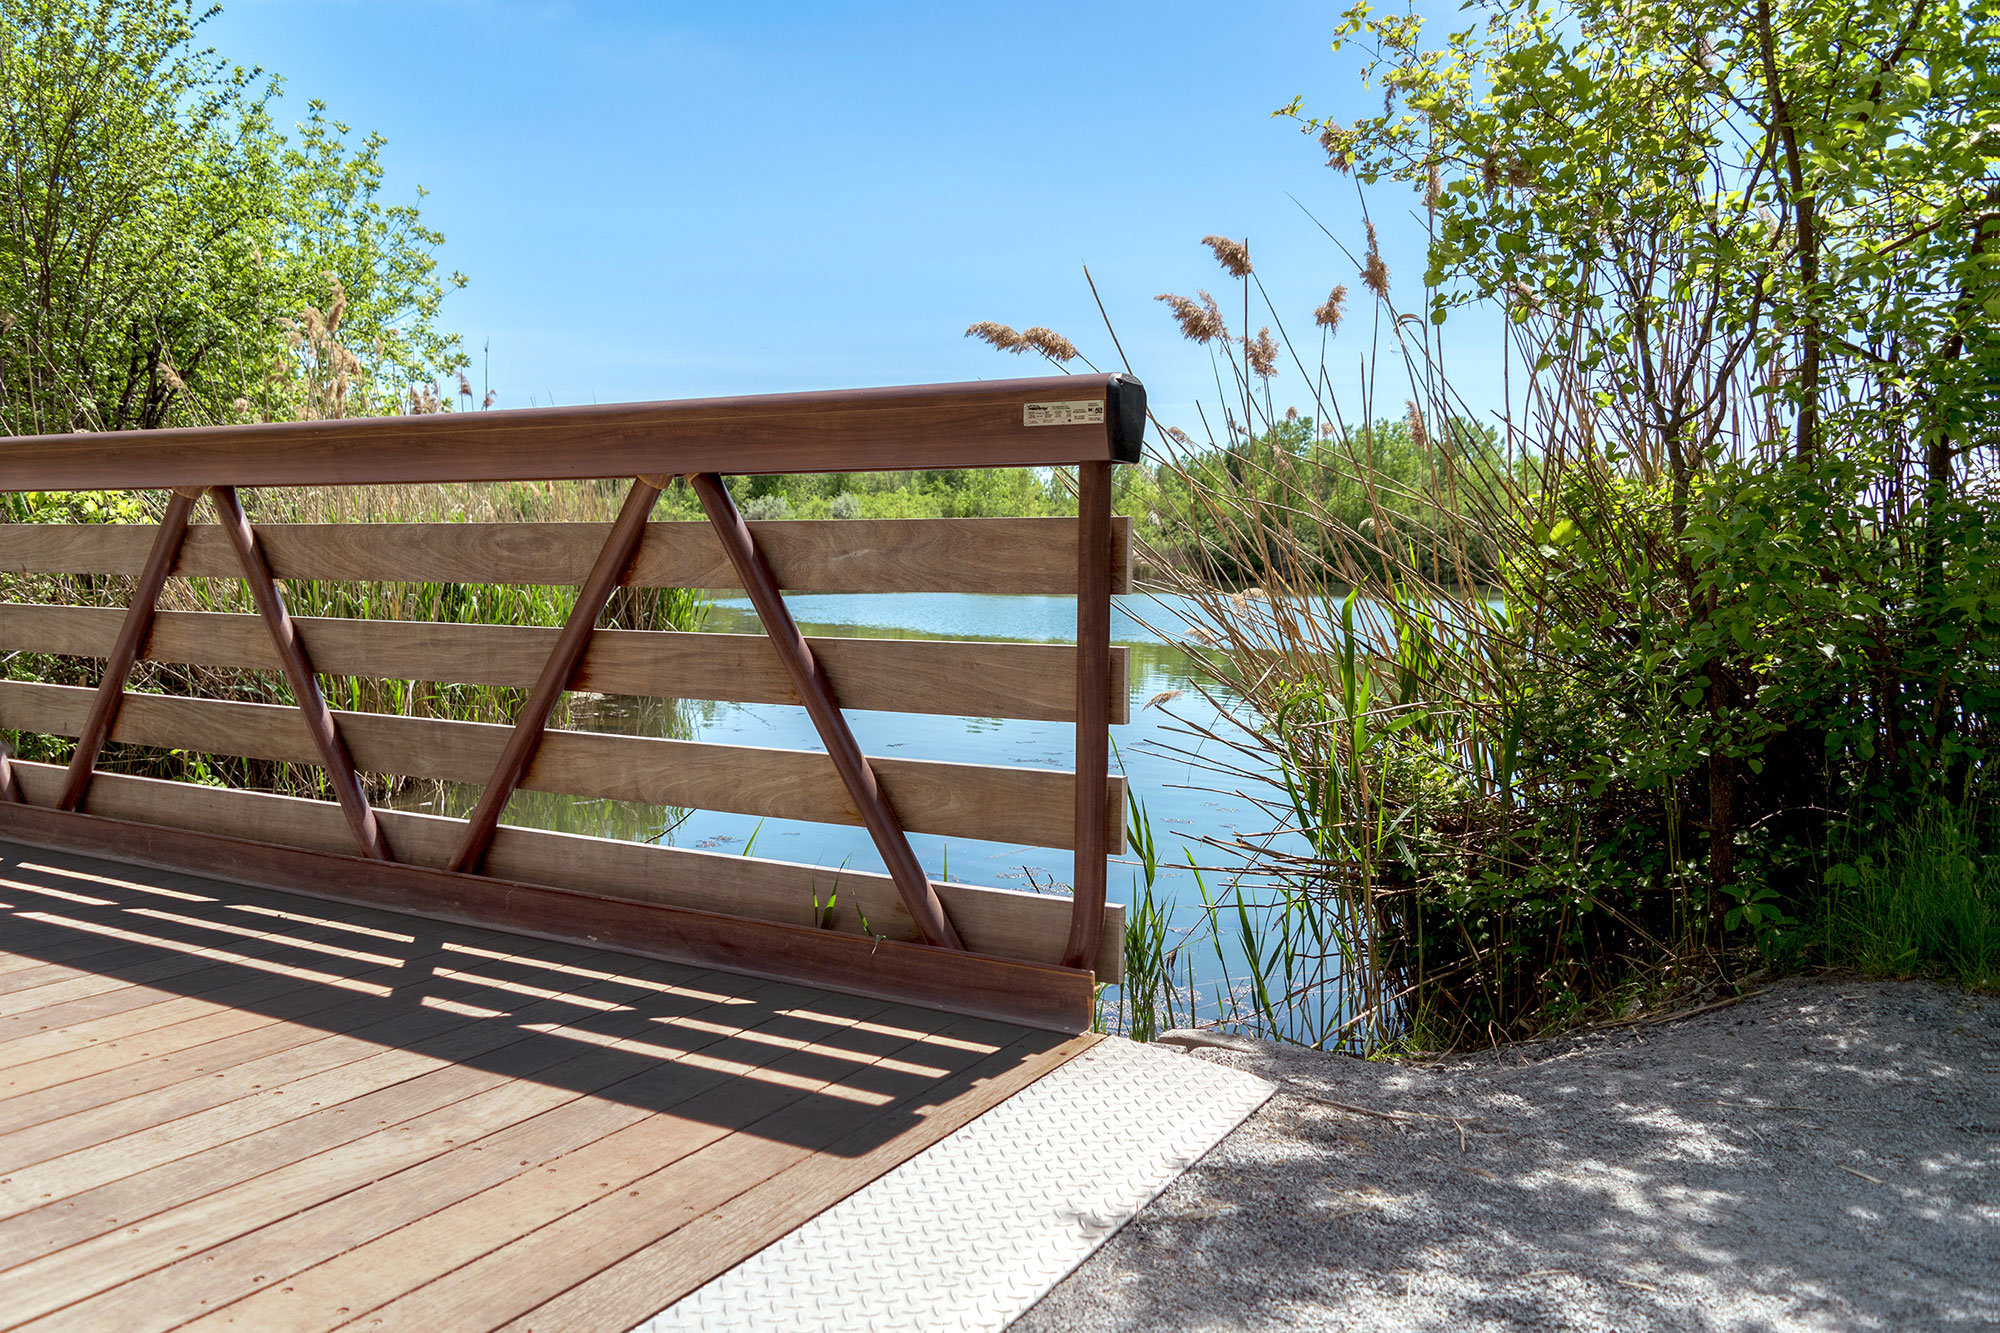 Weld-free aluminum pedestrian bridge with hardwood decking and faux-wood guardrail finish